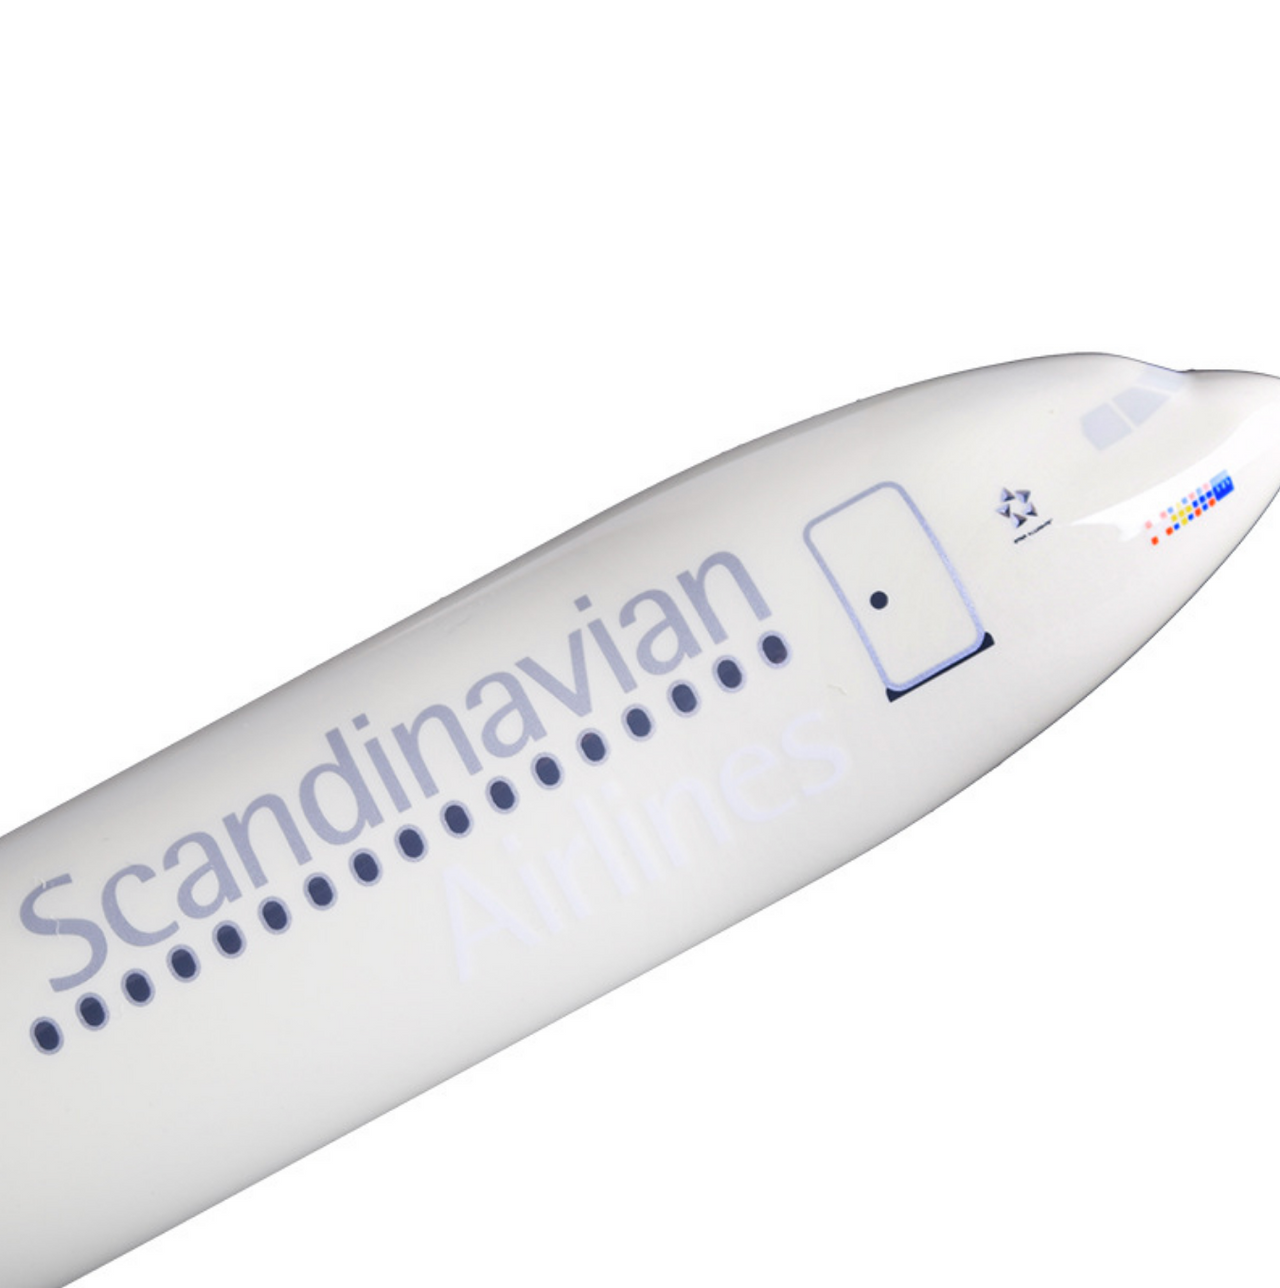 Scandinavian SAS Airbus A340 Airplane Model (Handmade 47CM)